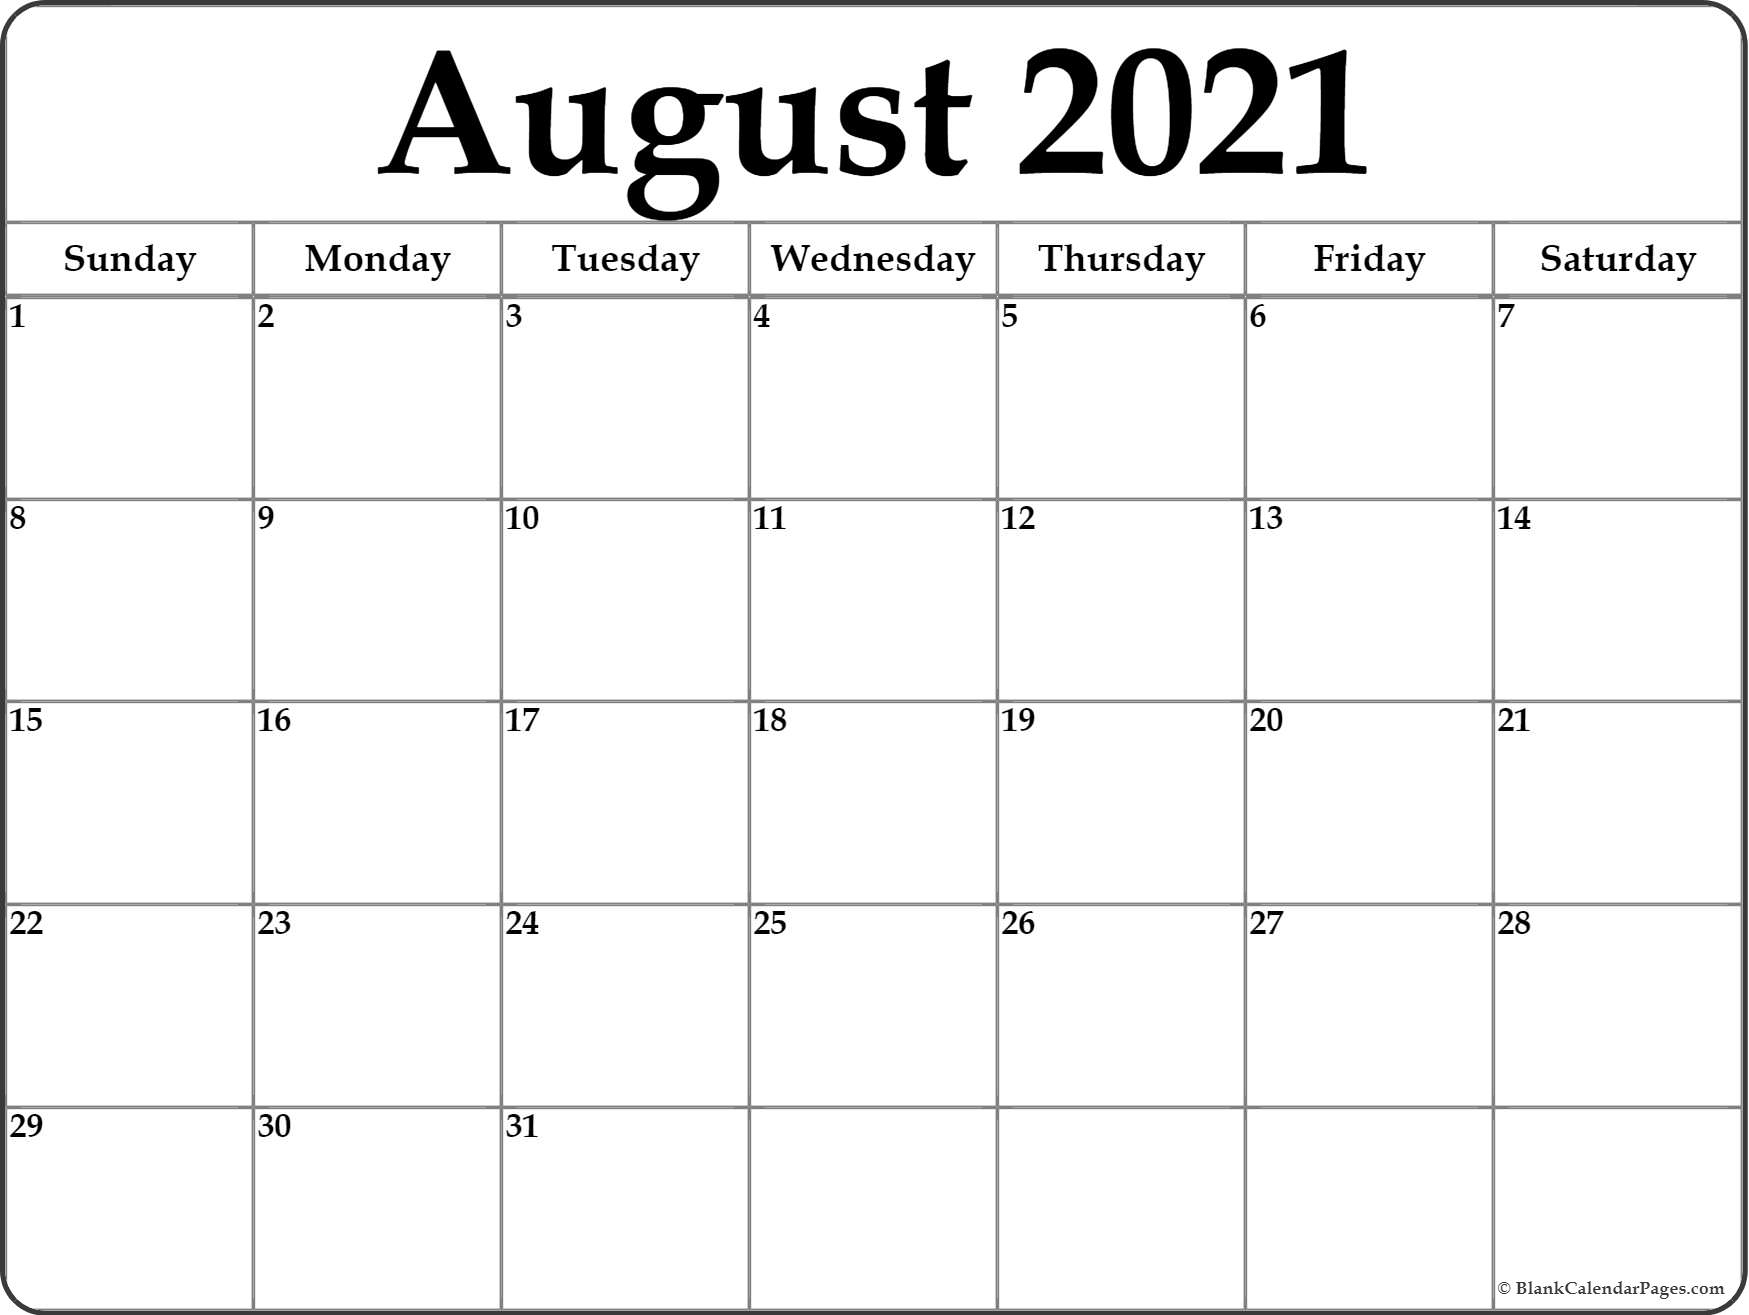 Get August 2021 Printable Calendars